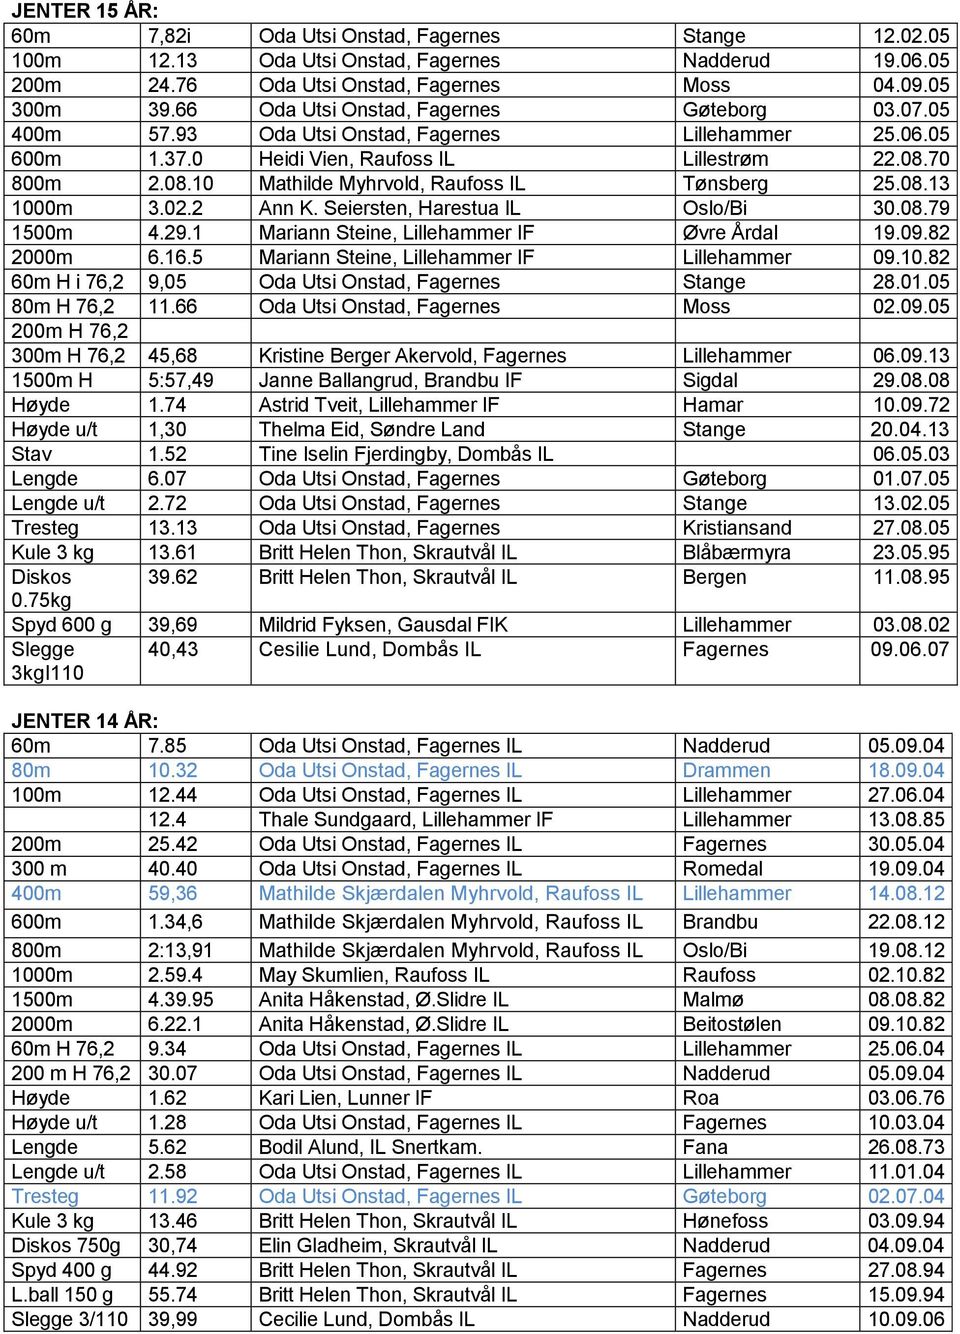 70 800m 2.08.10 Mathilde Myhrvold, Raufoss IL Tønsberg 25.08.13 1000m 3.02.2 Ann K. Seiersten, Harestua IL Oslo/Bi 30.08.79 1500m 4.29.1 Mariann Steine, Lillehammer IF Øvre Årdal 19.09.82 2000m 6.16.